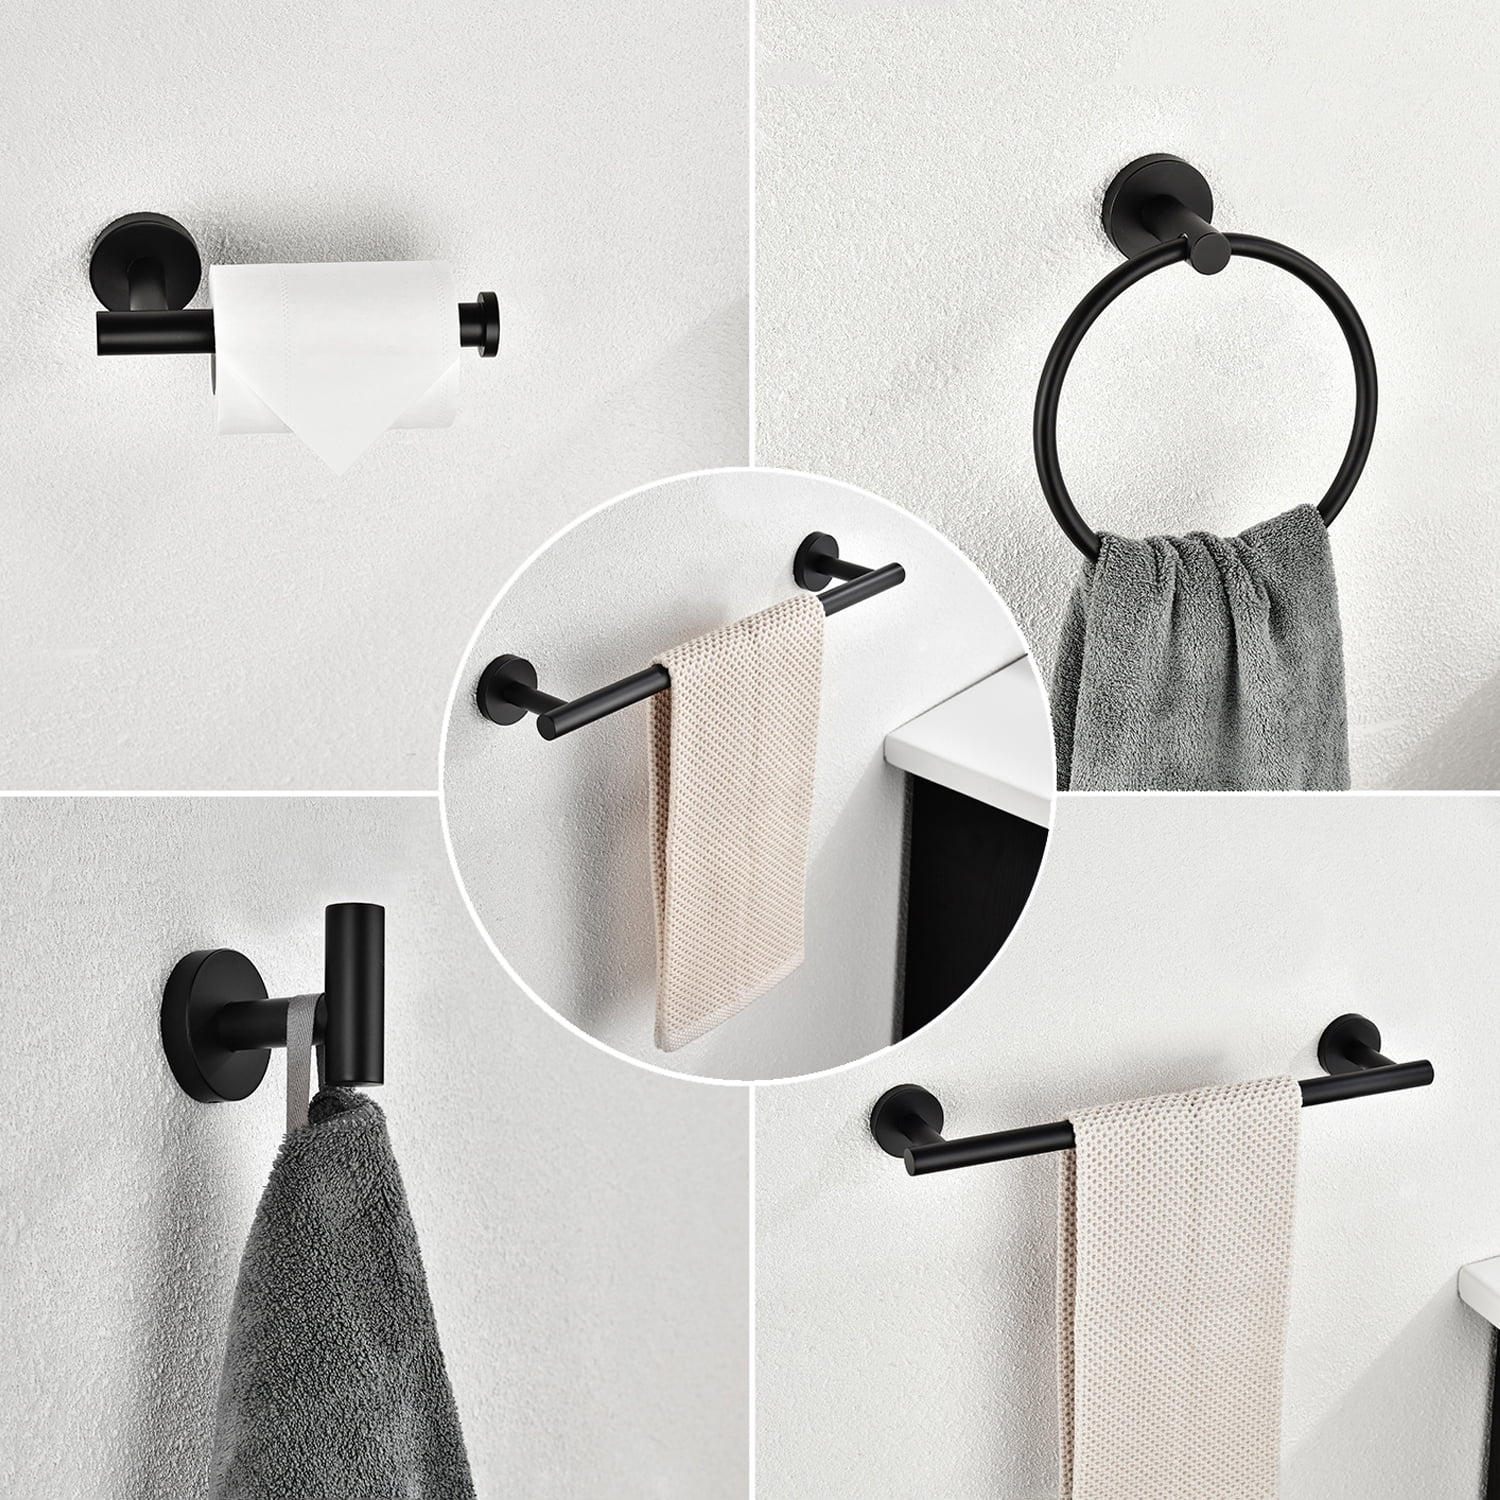 Details about    Aluminum Bathroom Towel Shelf Bar Holder Hardware Hook Wall Mounted Accessories 